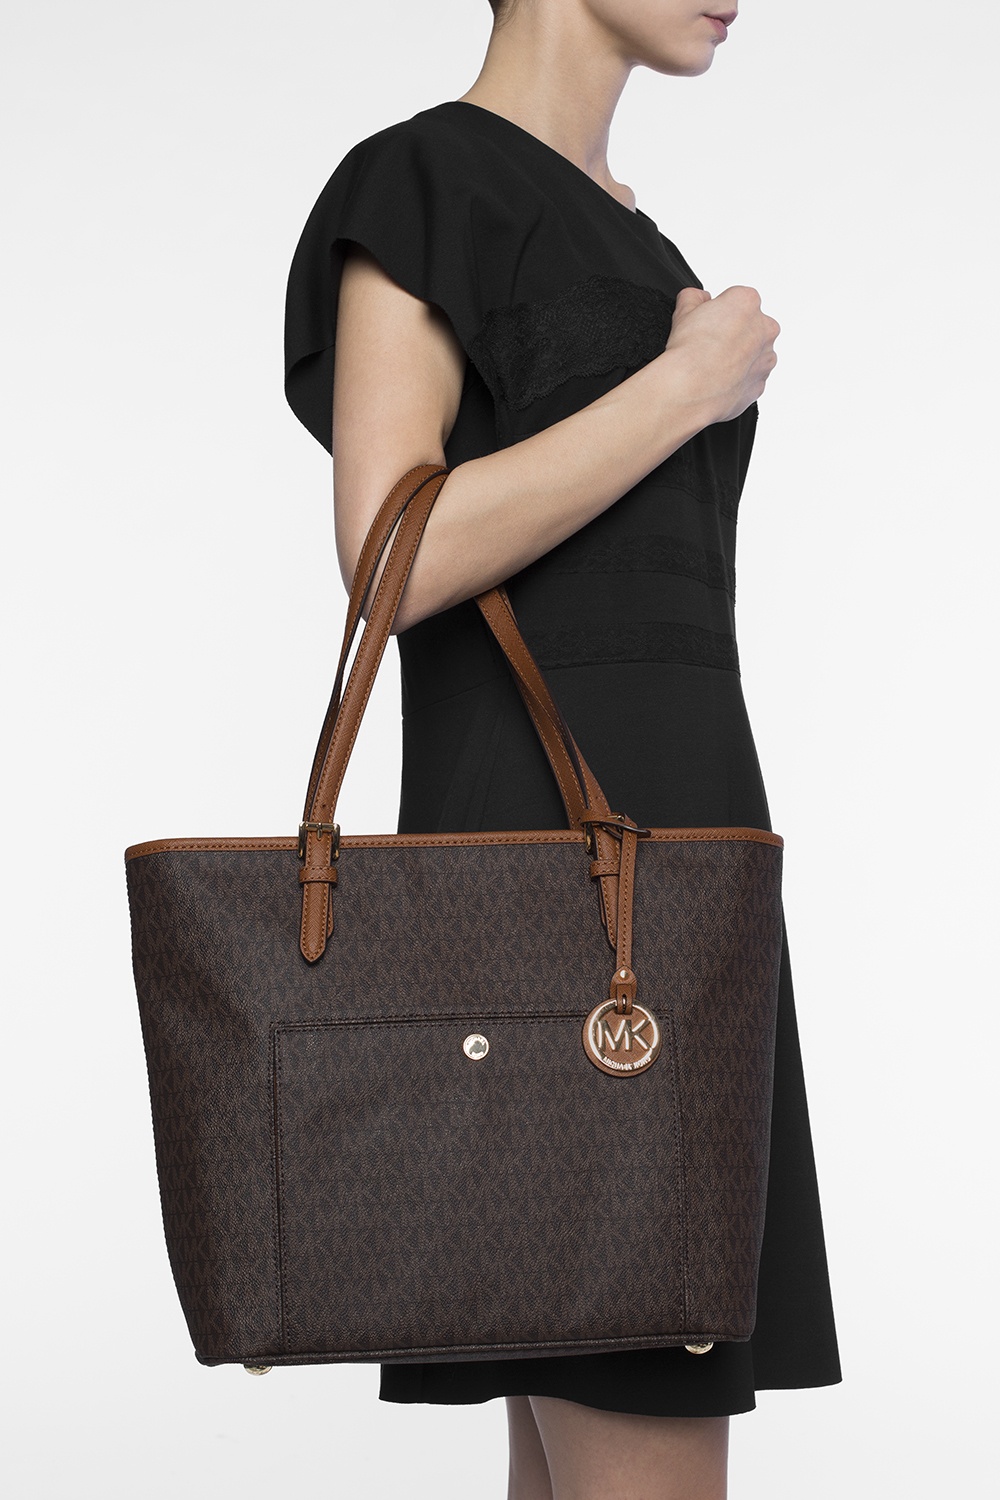 Michael Michael Kors 'Jet Set Item' shoulder bag, Women's Bags